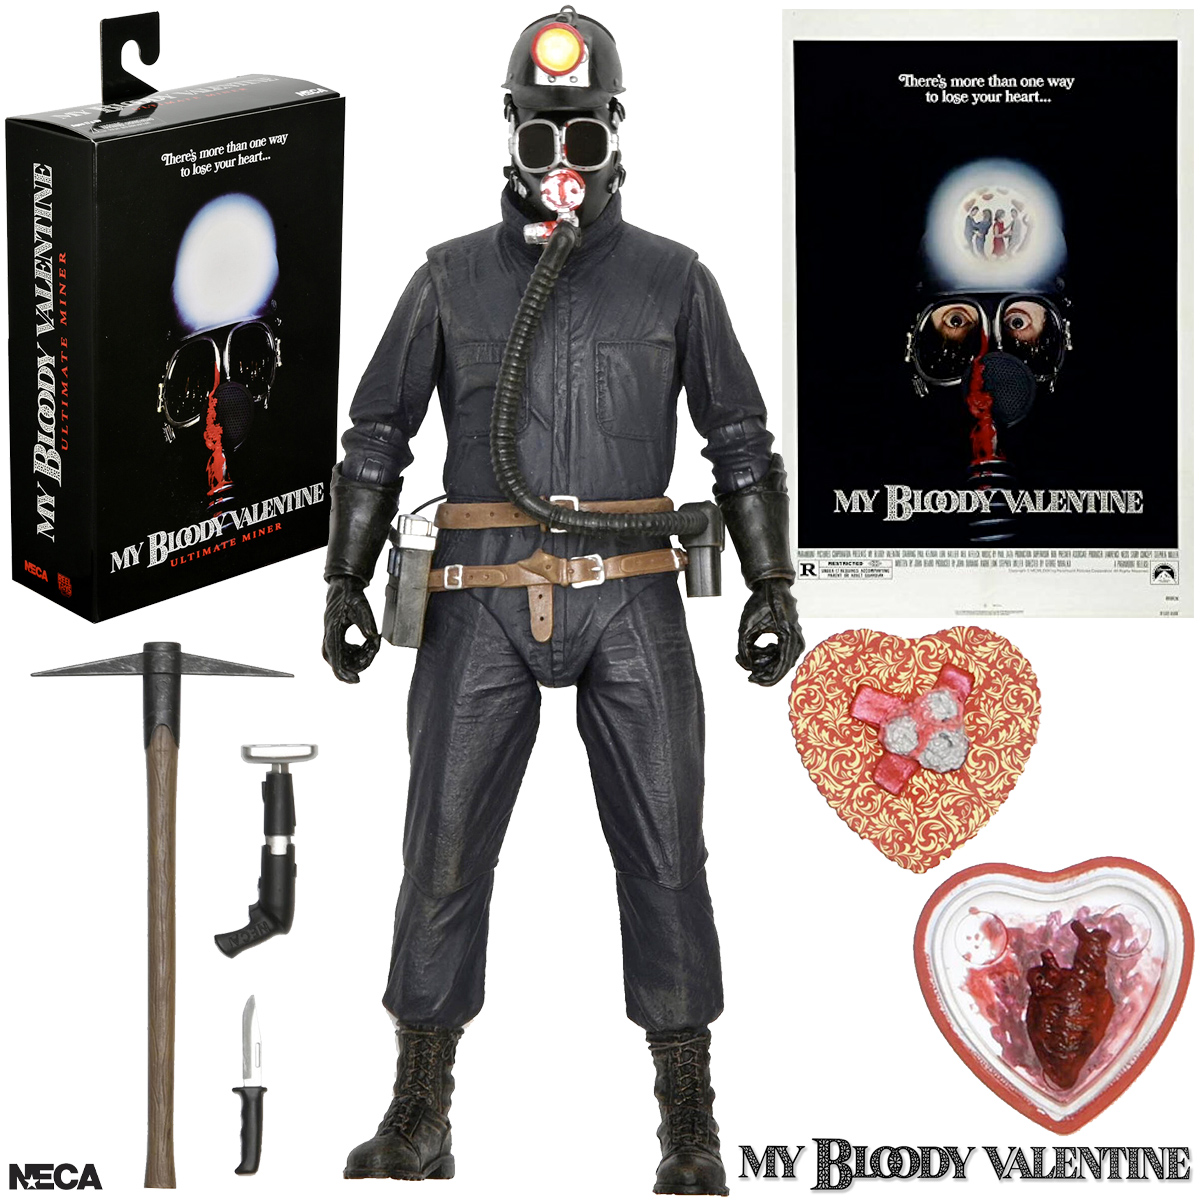 The Miner do Filme Slasher Dia dos Namorados Macabro (My Bloody Valentine) - Action Figure Neca Ultimate